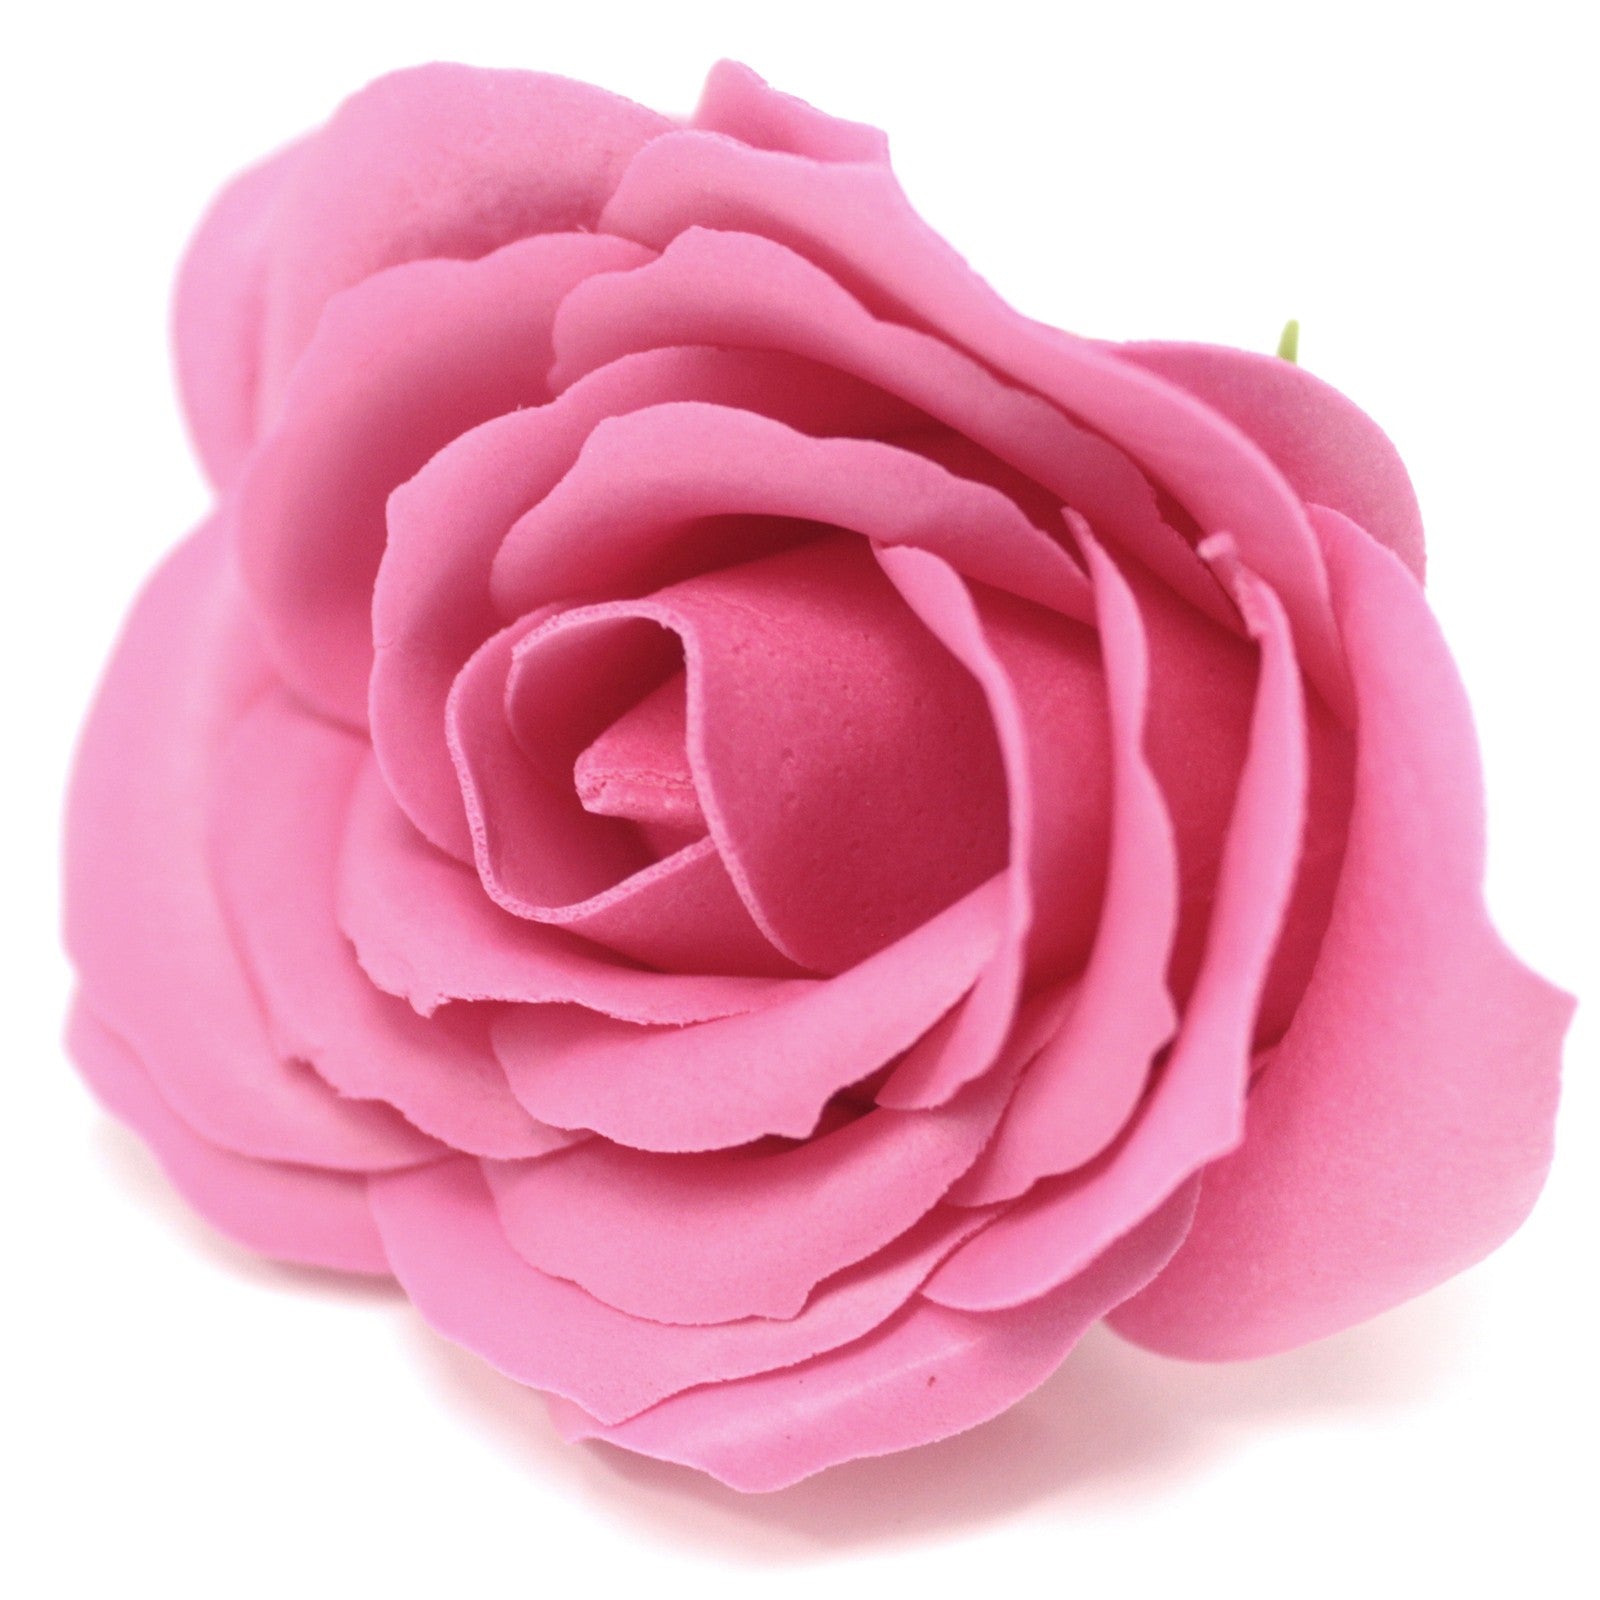 View Craft Soap Flowers Lrg Rose Rose x 10 pcs information